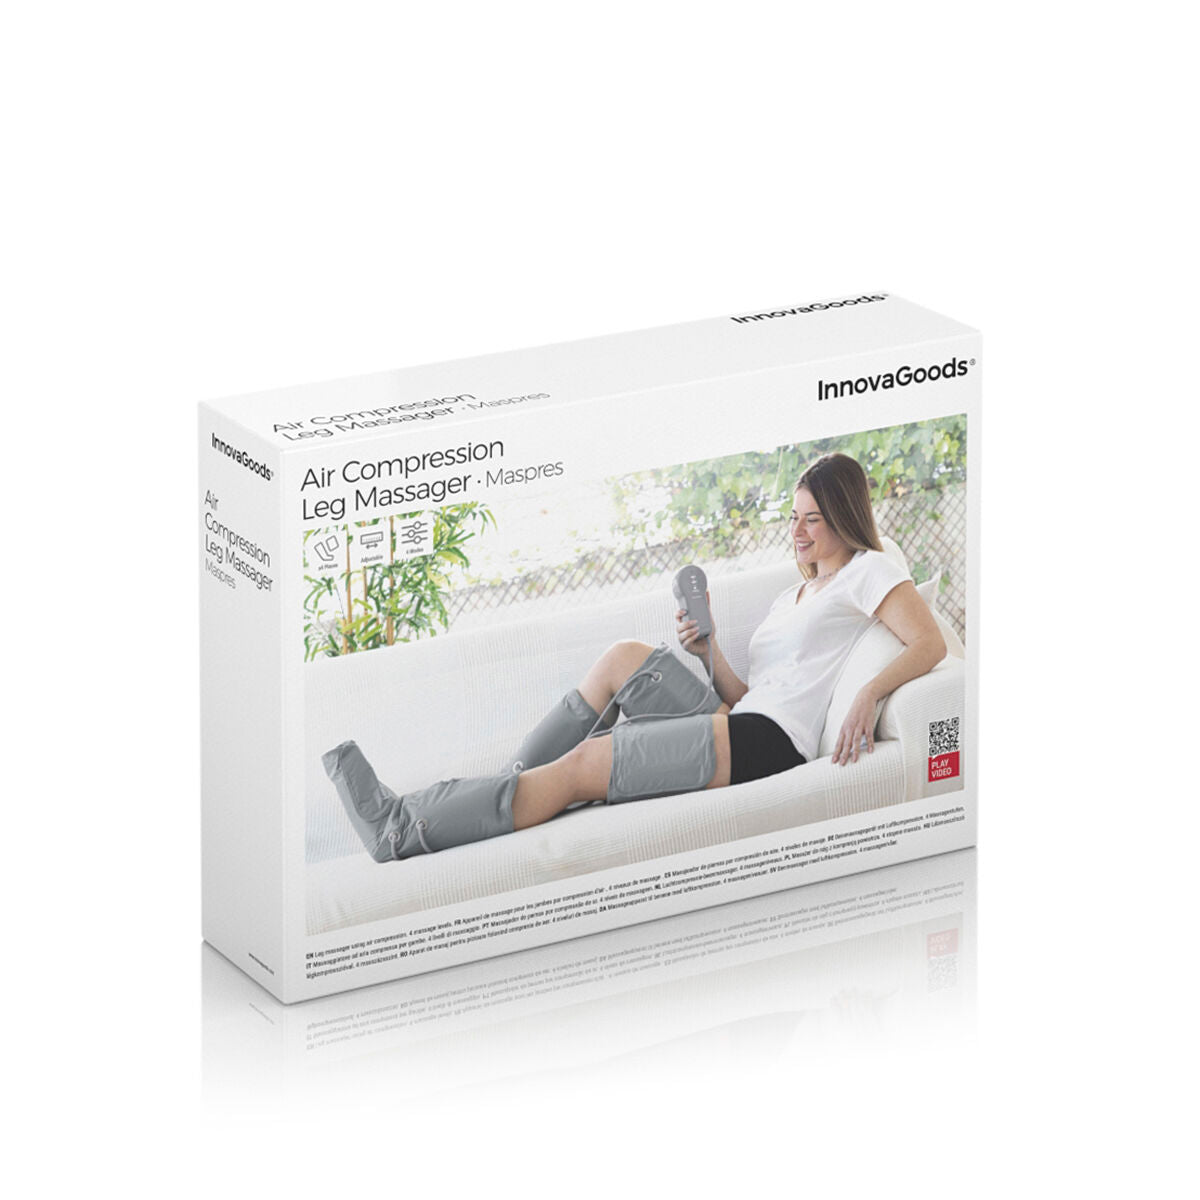 Air Compression Leg Massager Maspres InnovaGoods